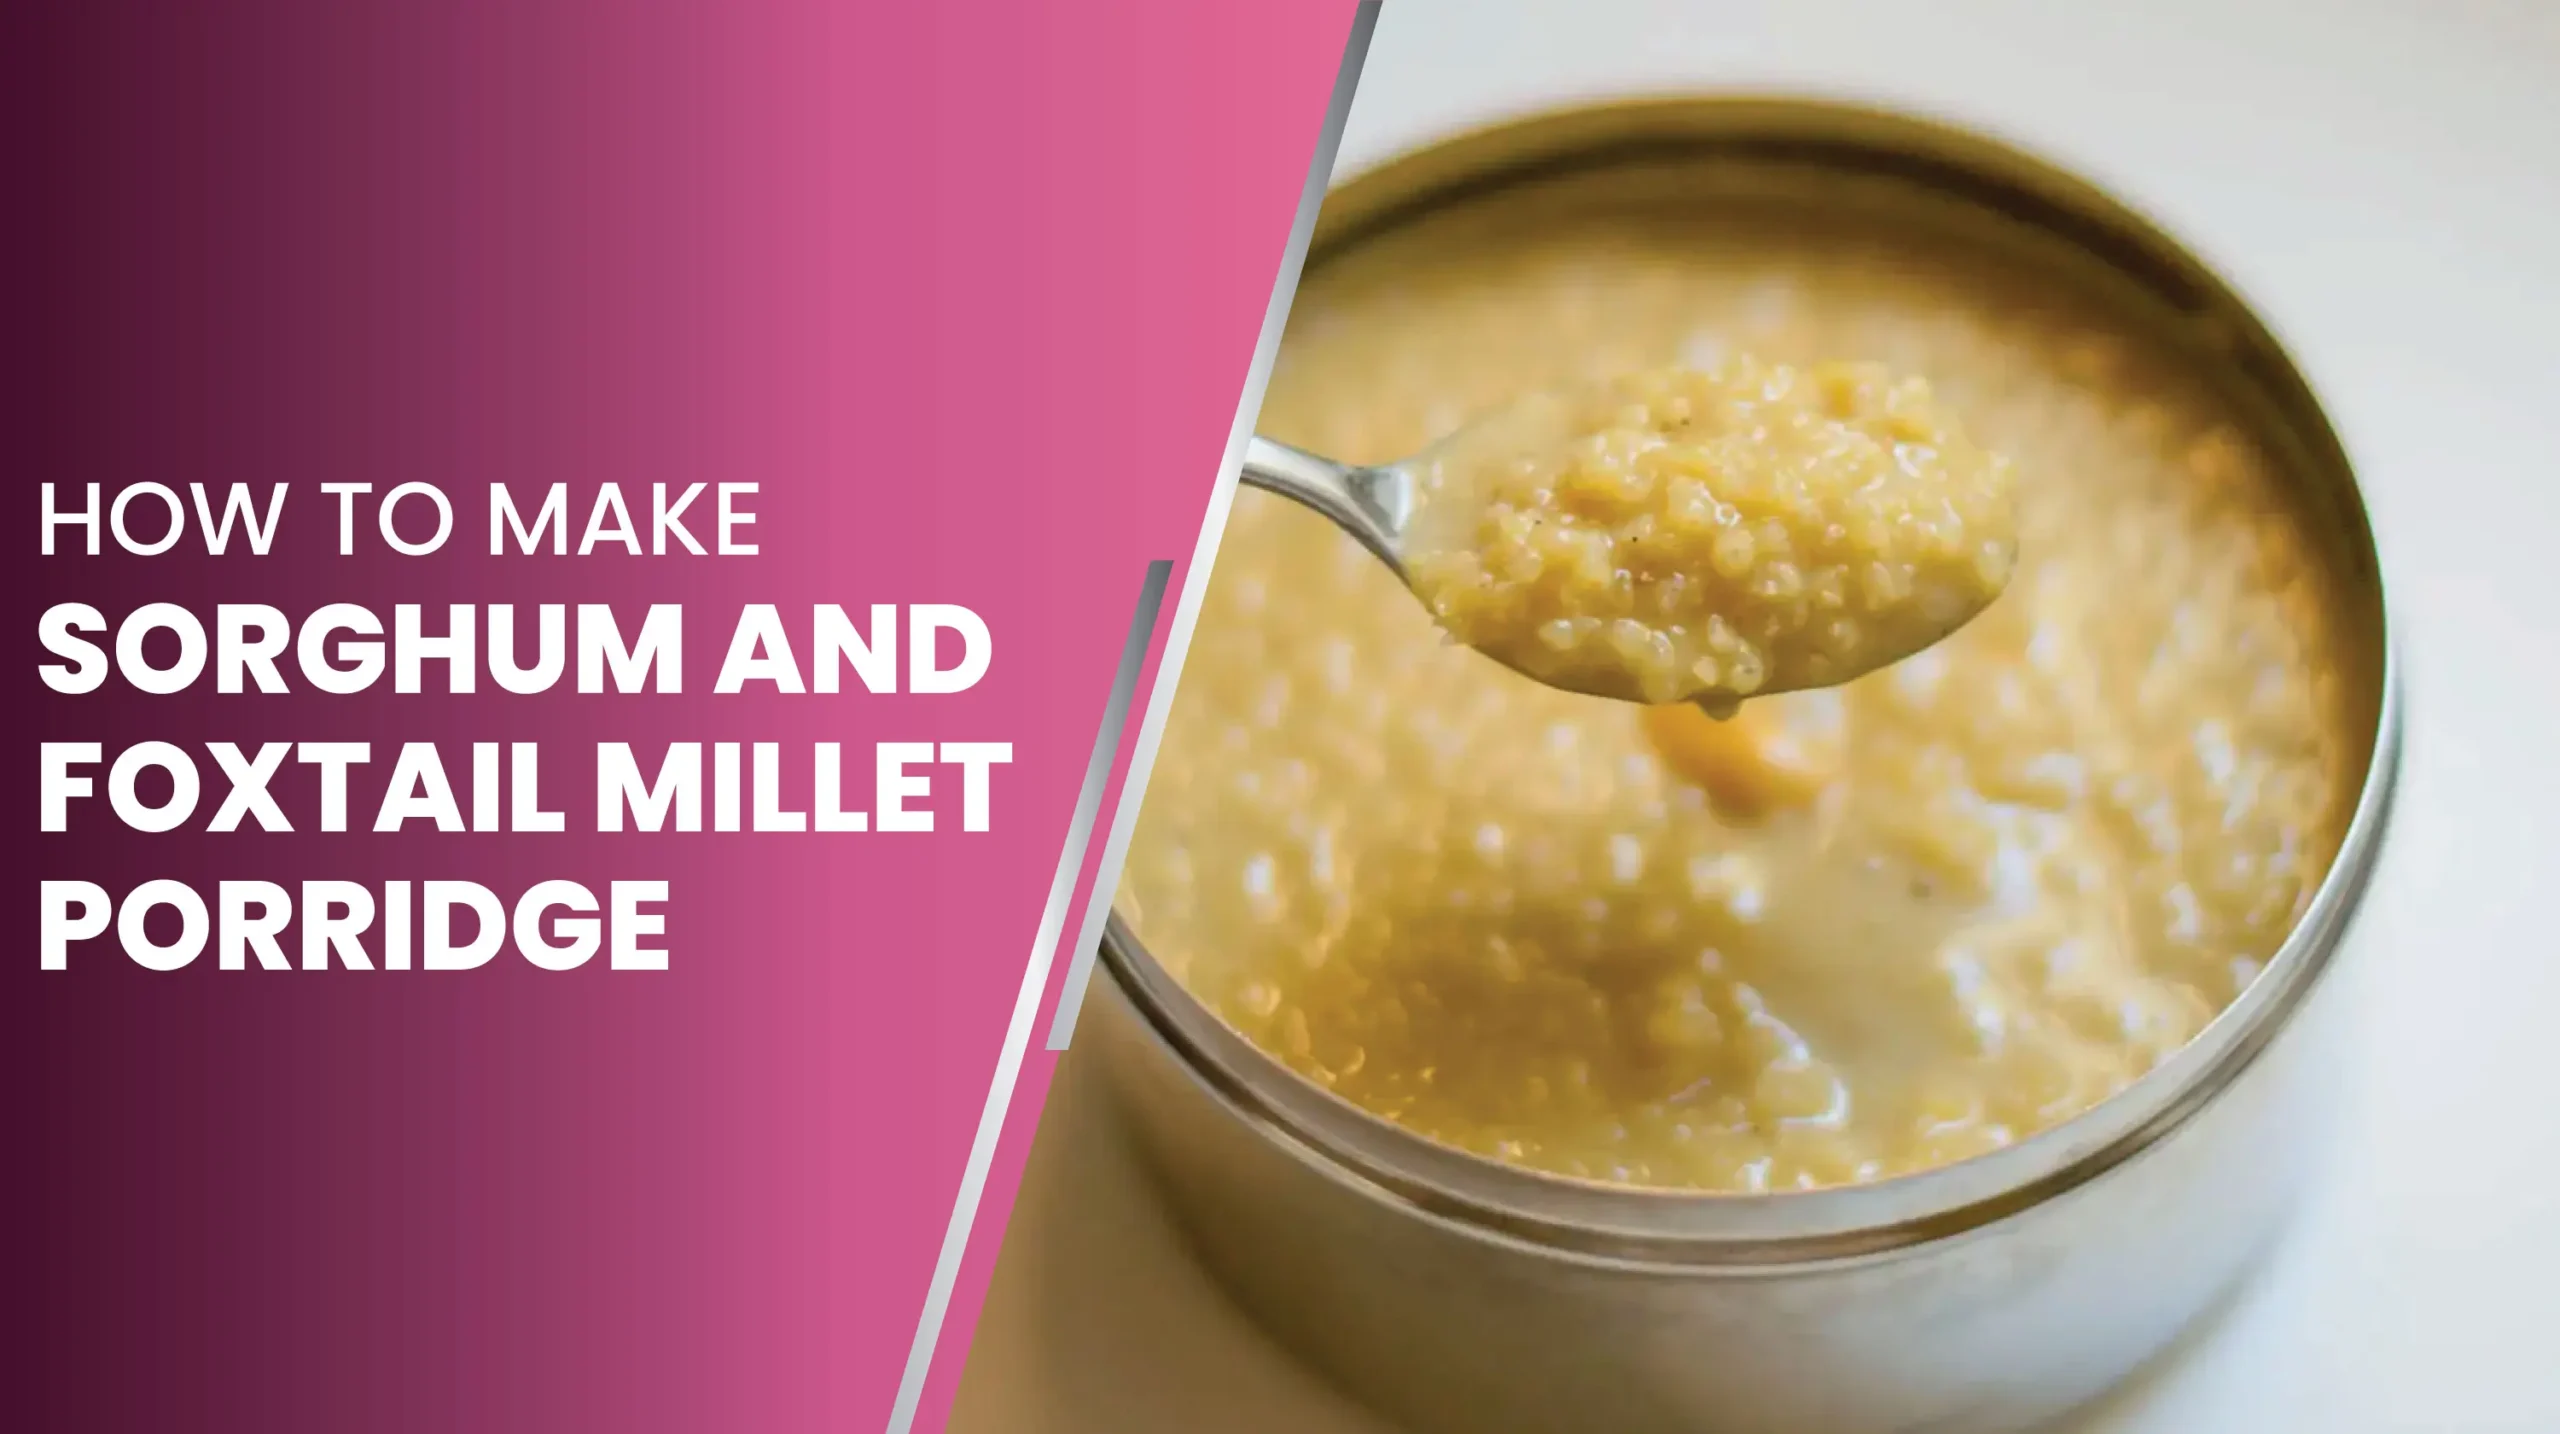 11how to make Sorghum and Foxtail Millet Porridge recipe